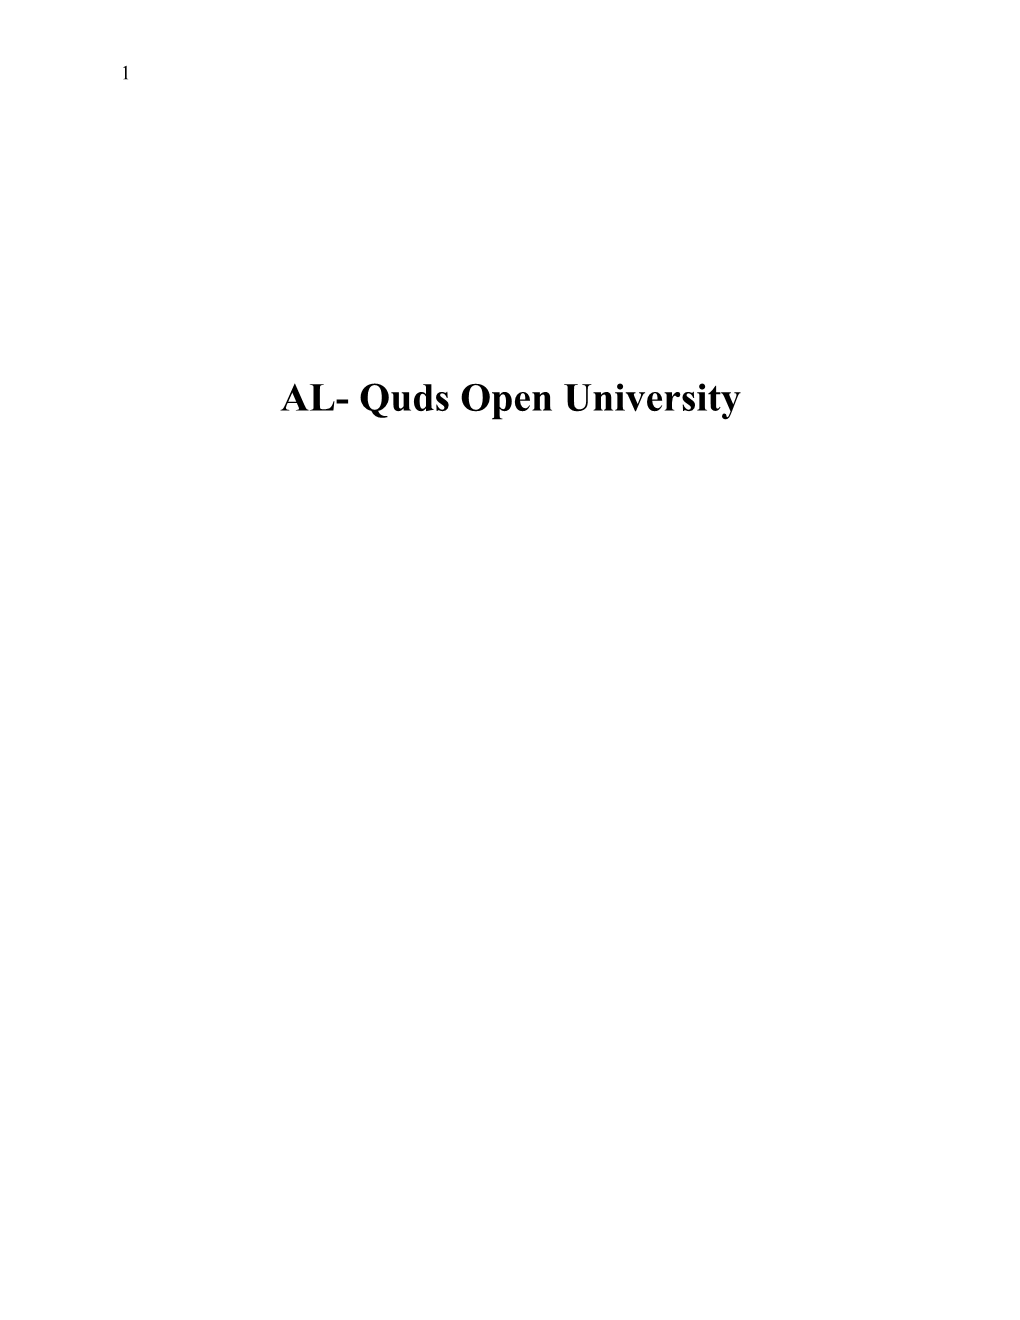 AL- Quds Open University